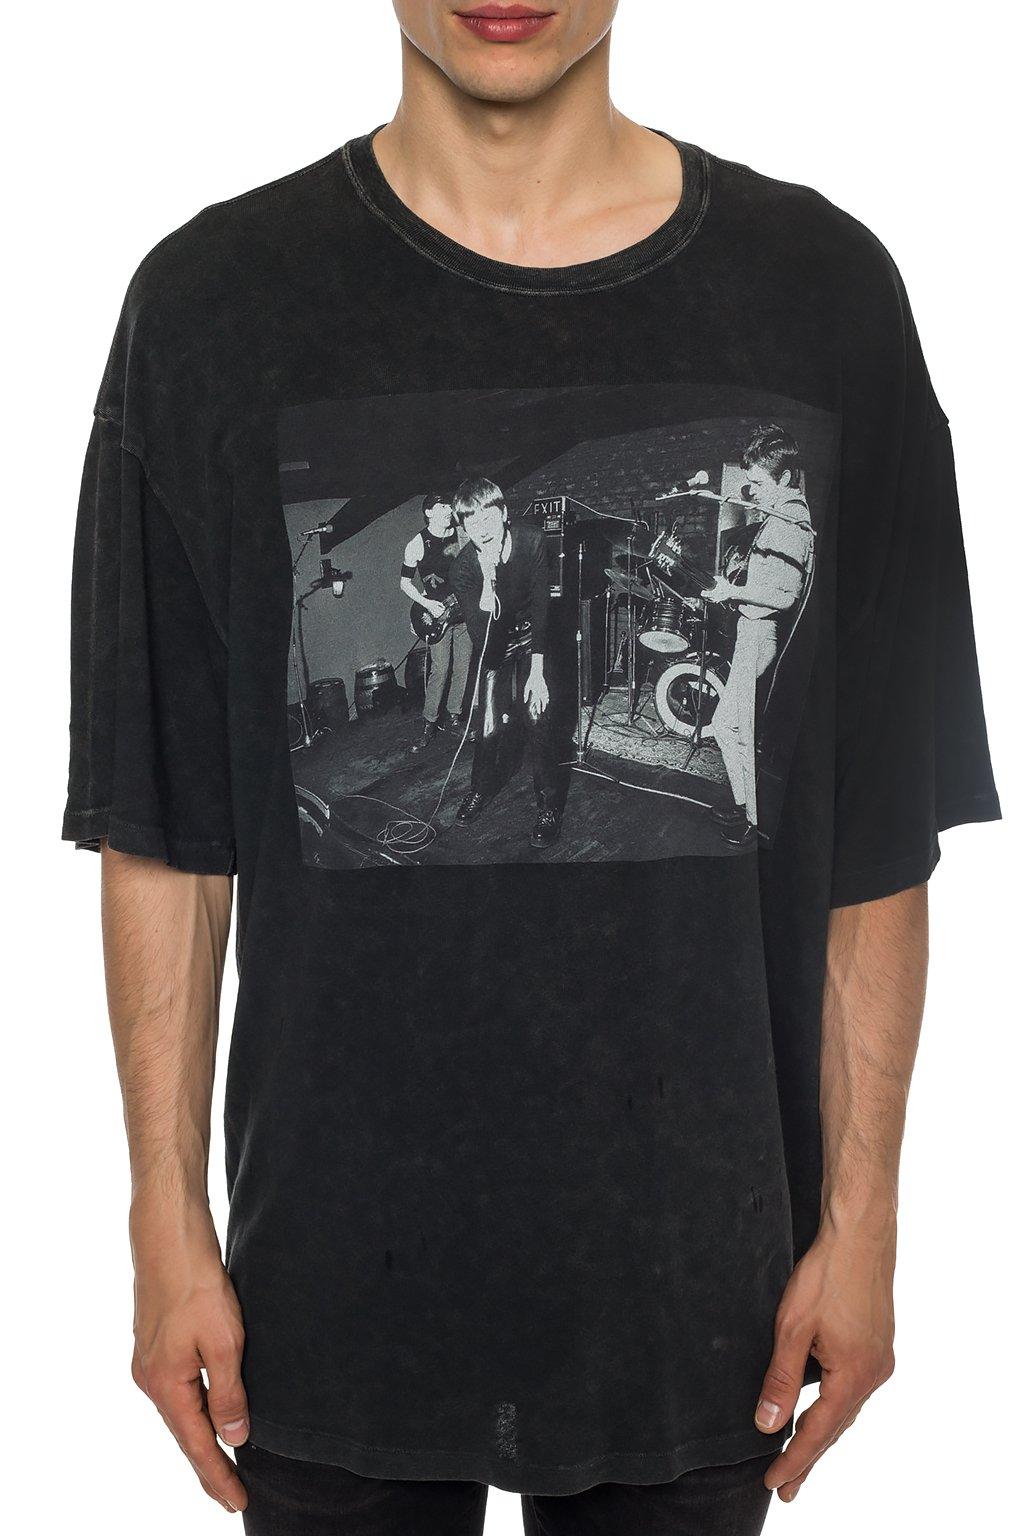 R13 Cotton Black Joy Division Warsaw T-shirt for Men - Save 60% - Lyst